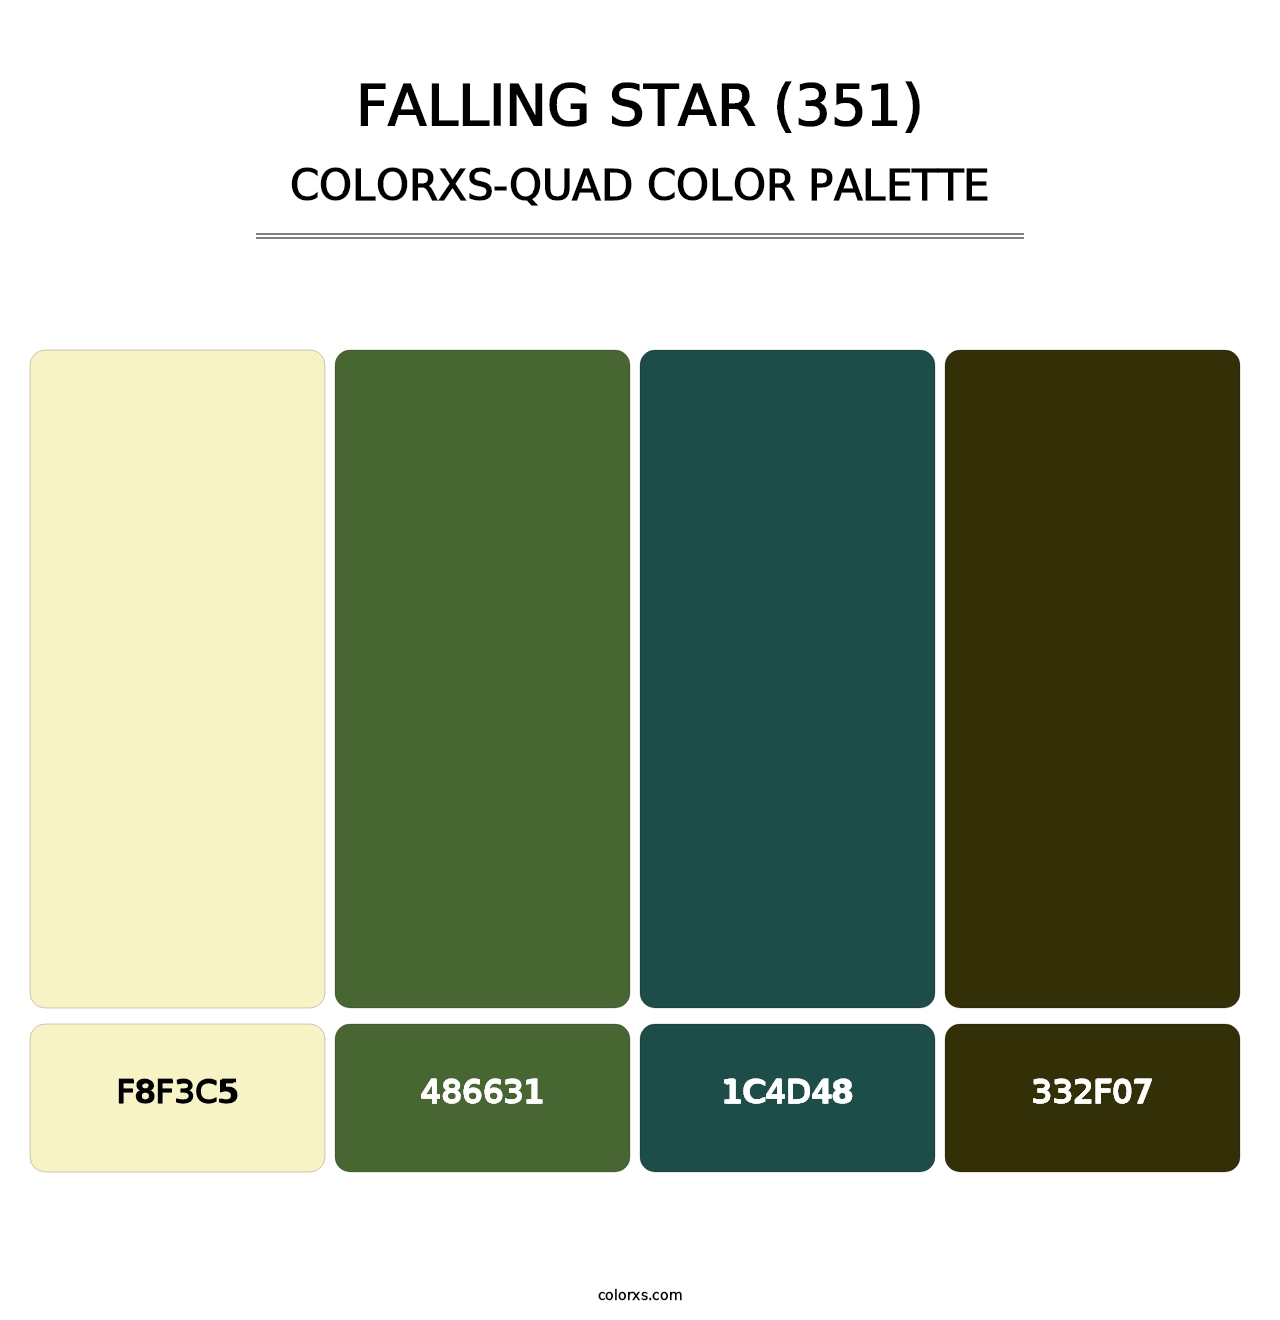 Falling Star (351) - Colorxs Quad Palette